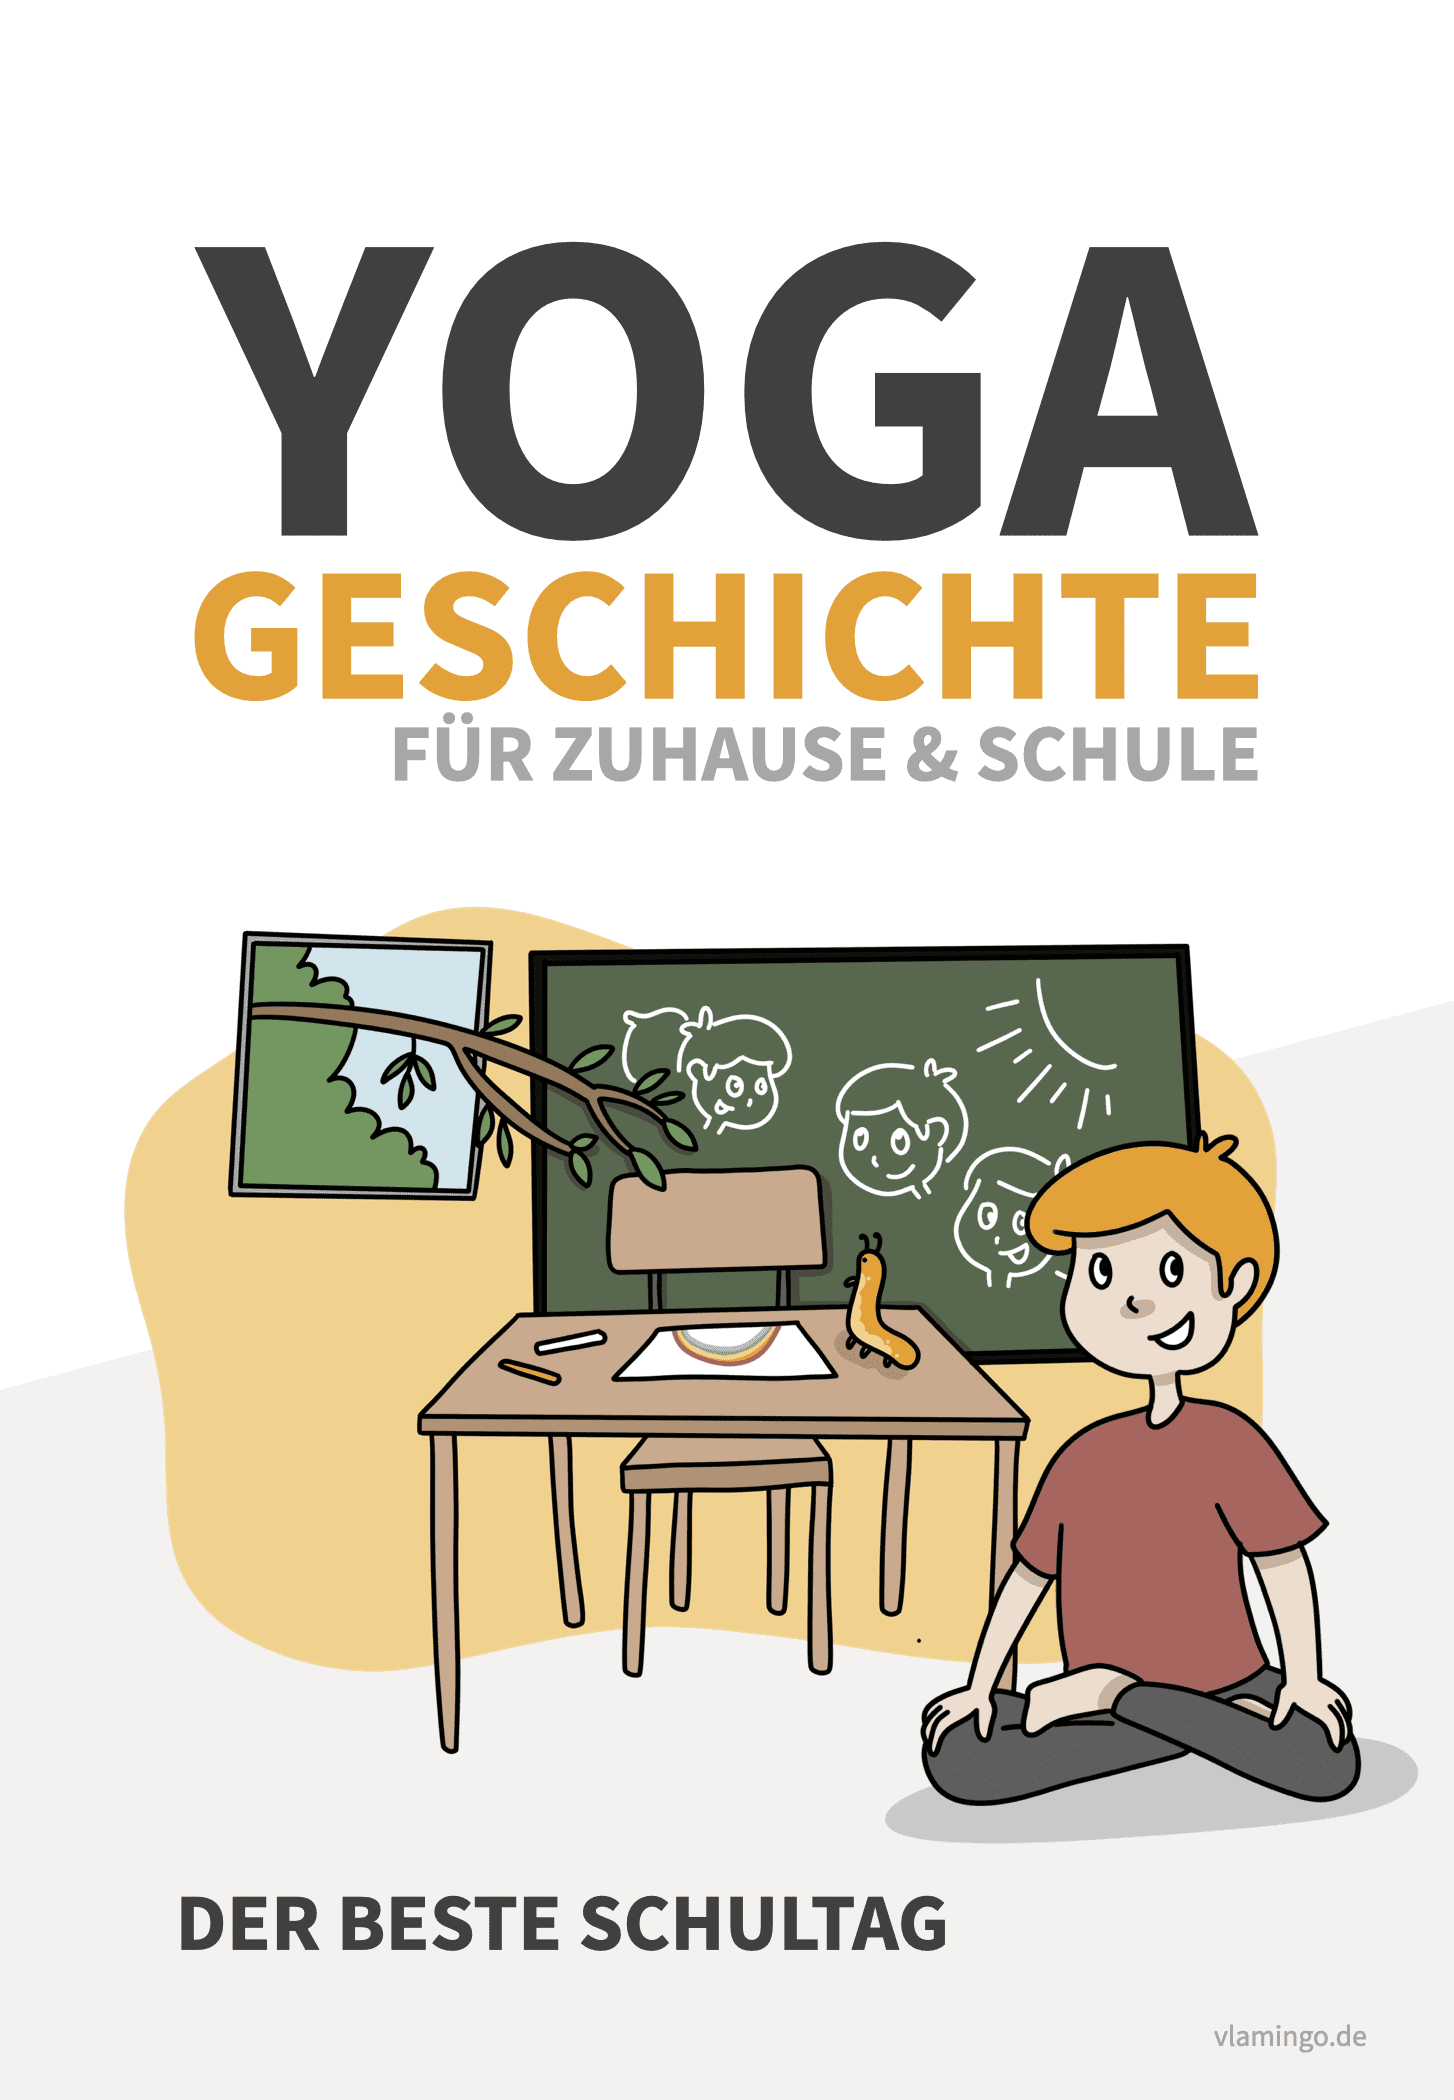 Yoga-Geschichte - Der beste Schultag (Kinderyoga)